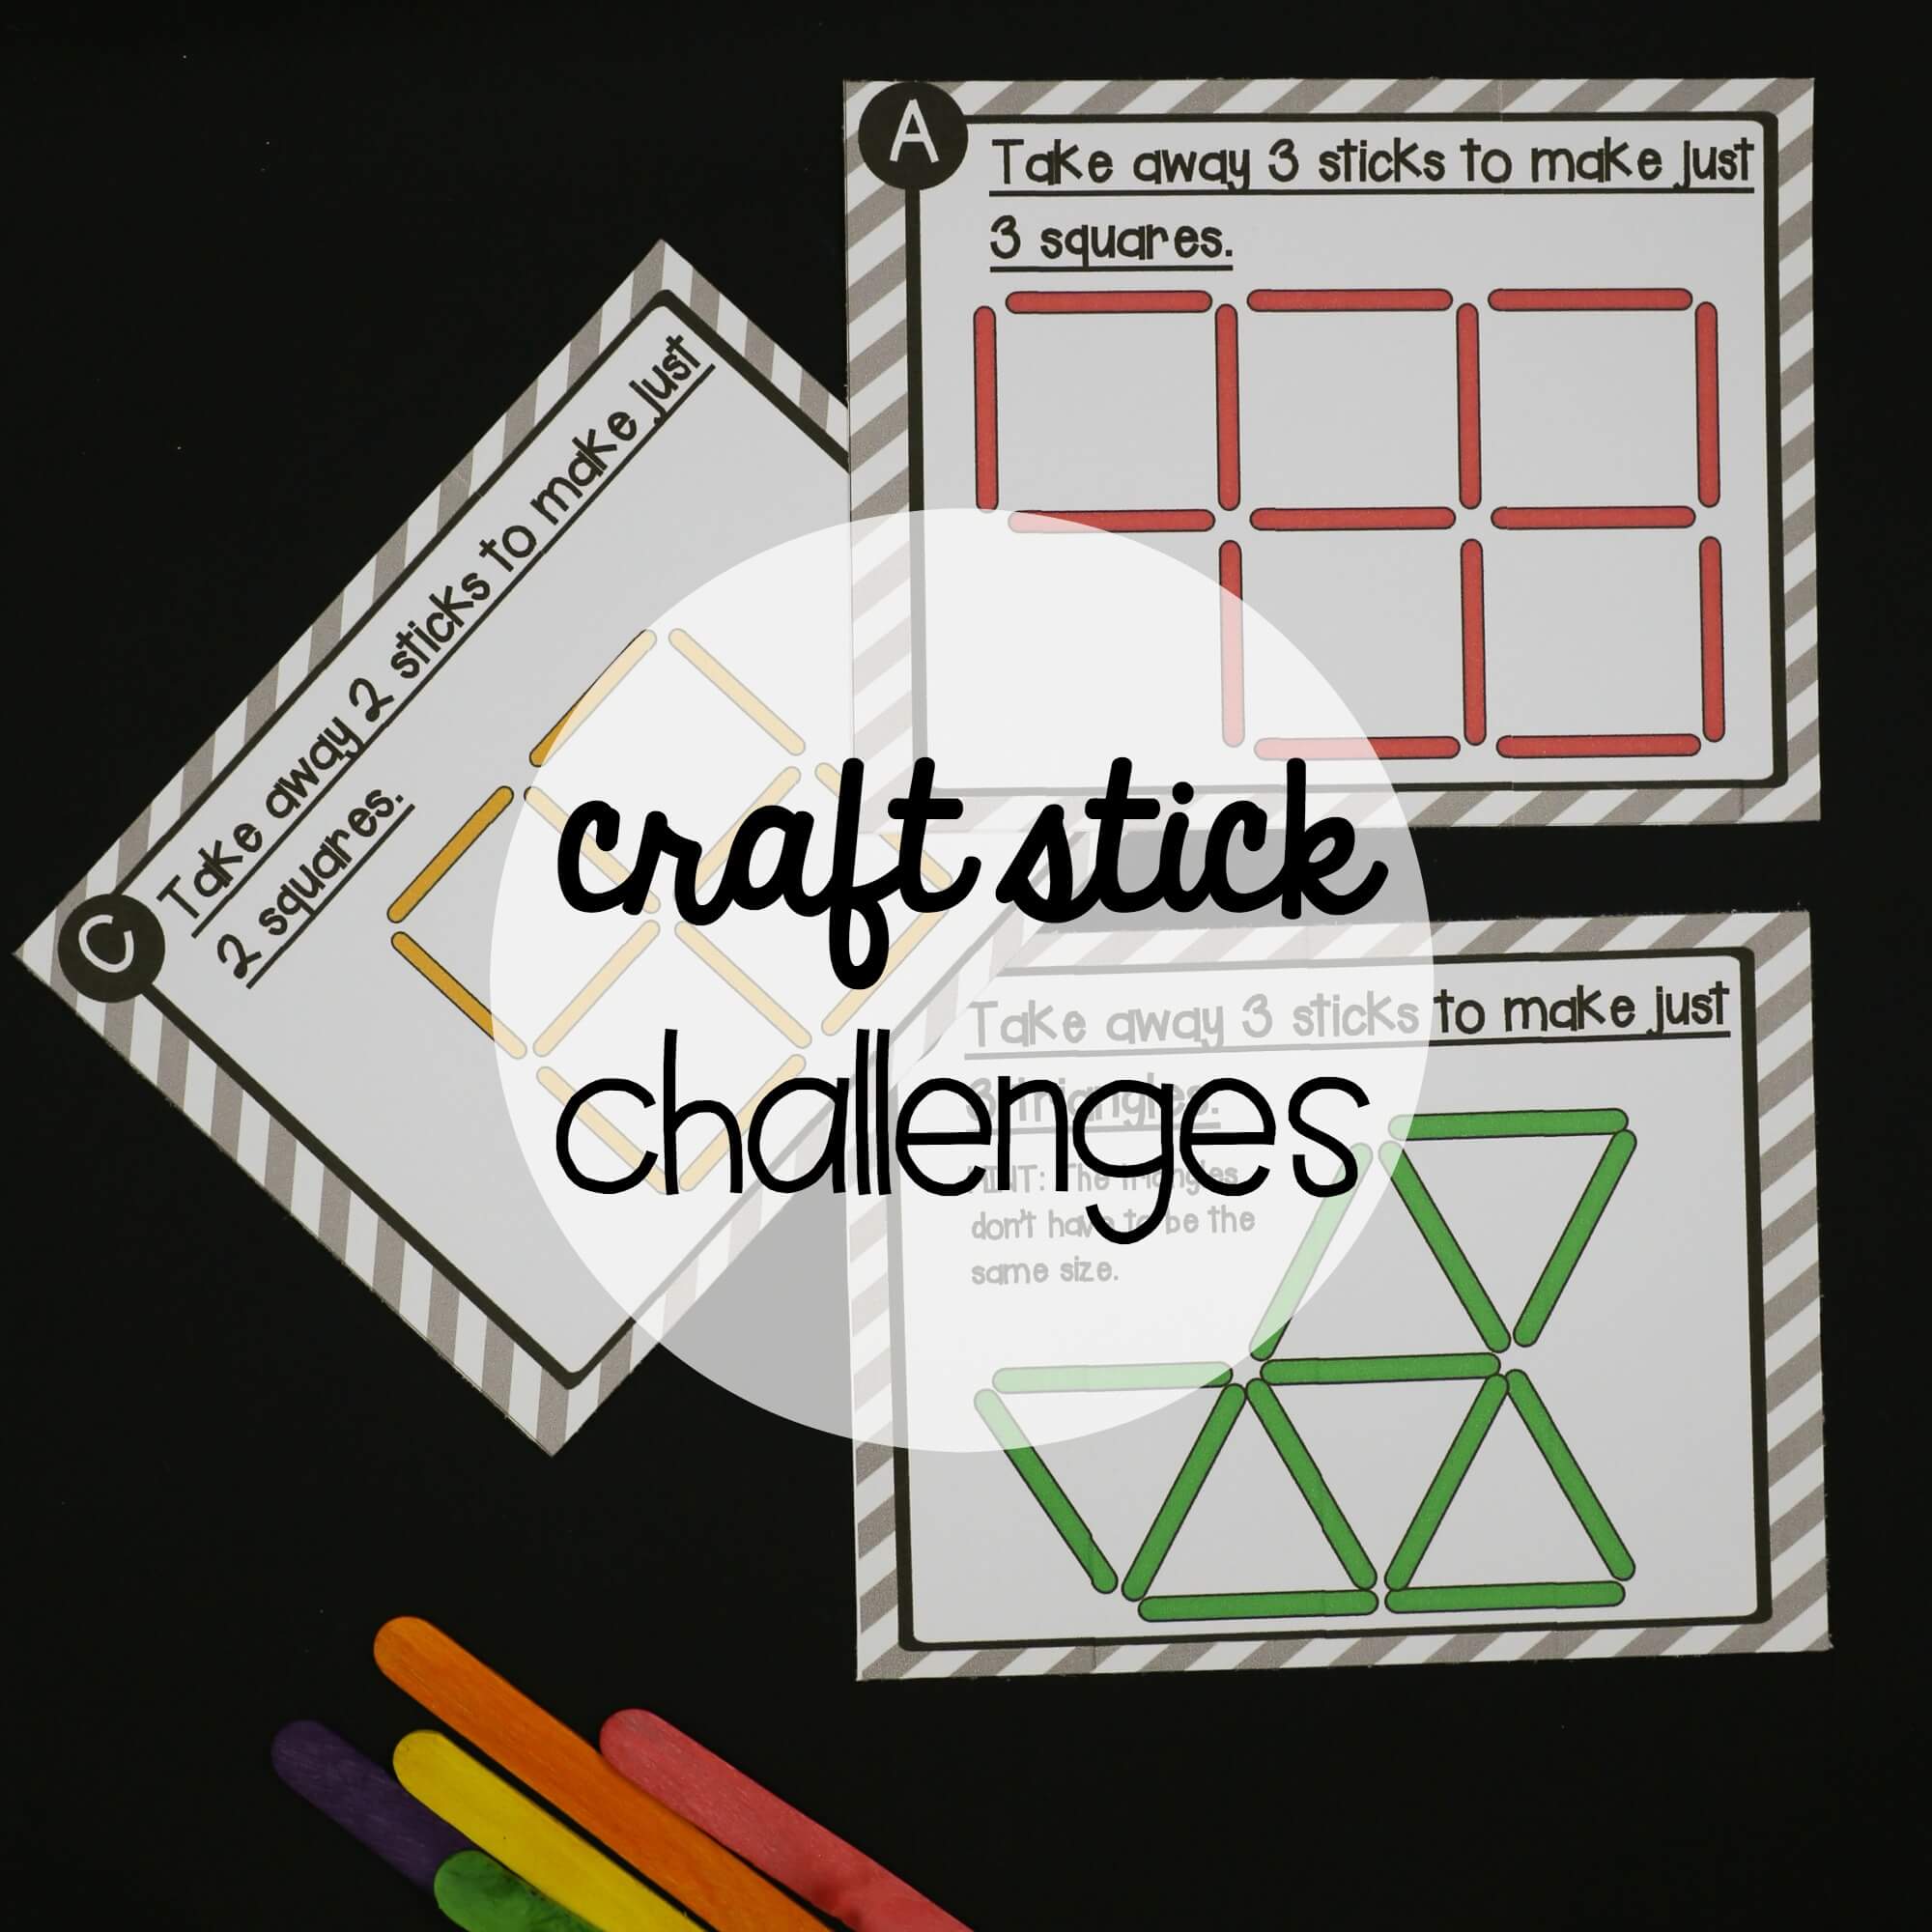 STEM Challenge: Craft Stick Puzzles